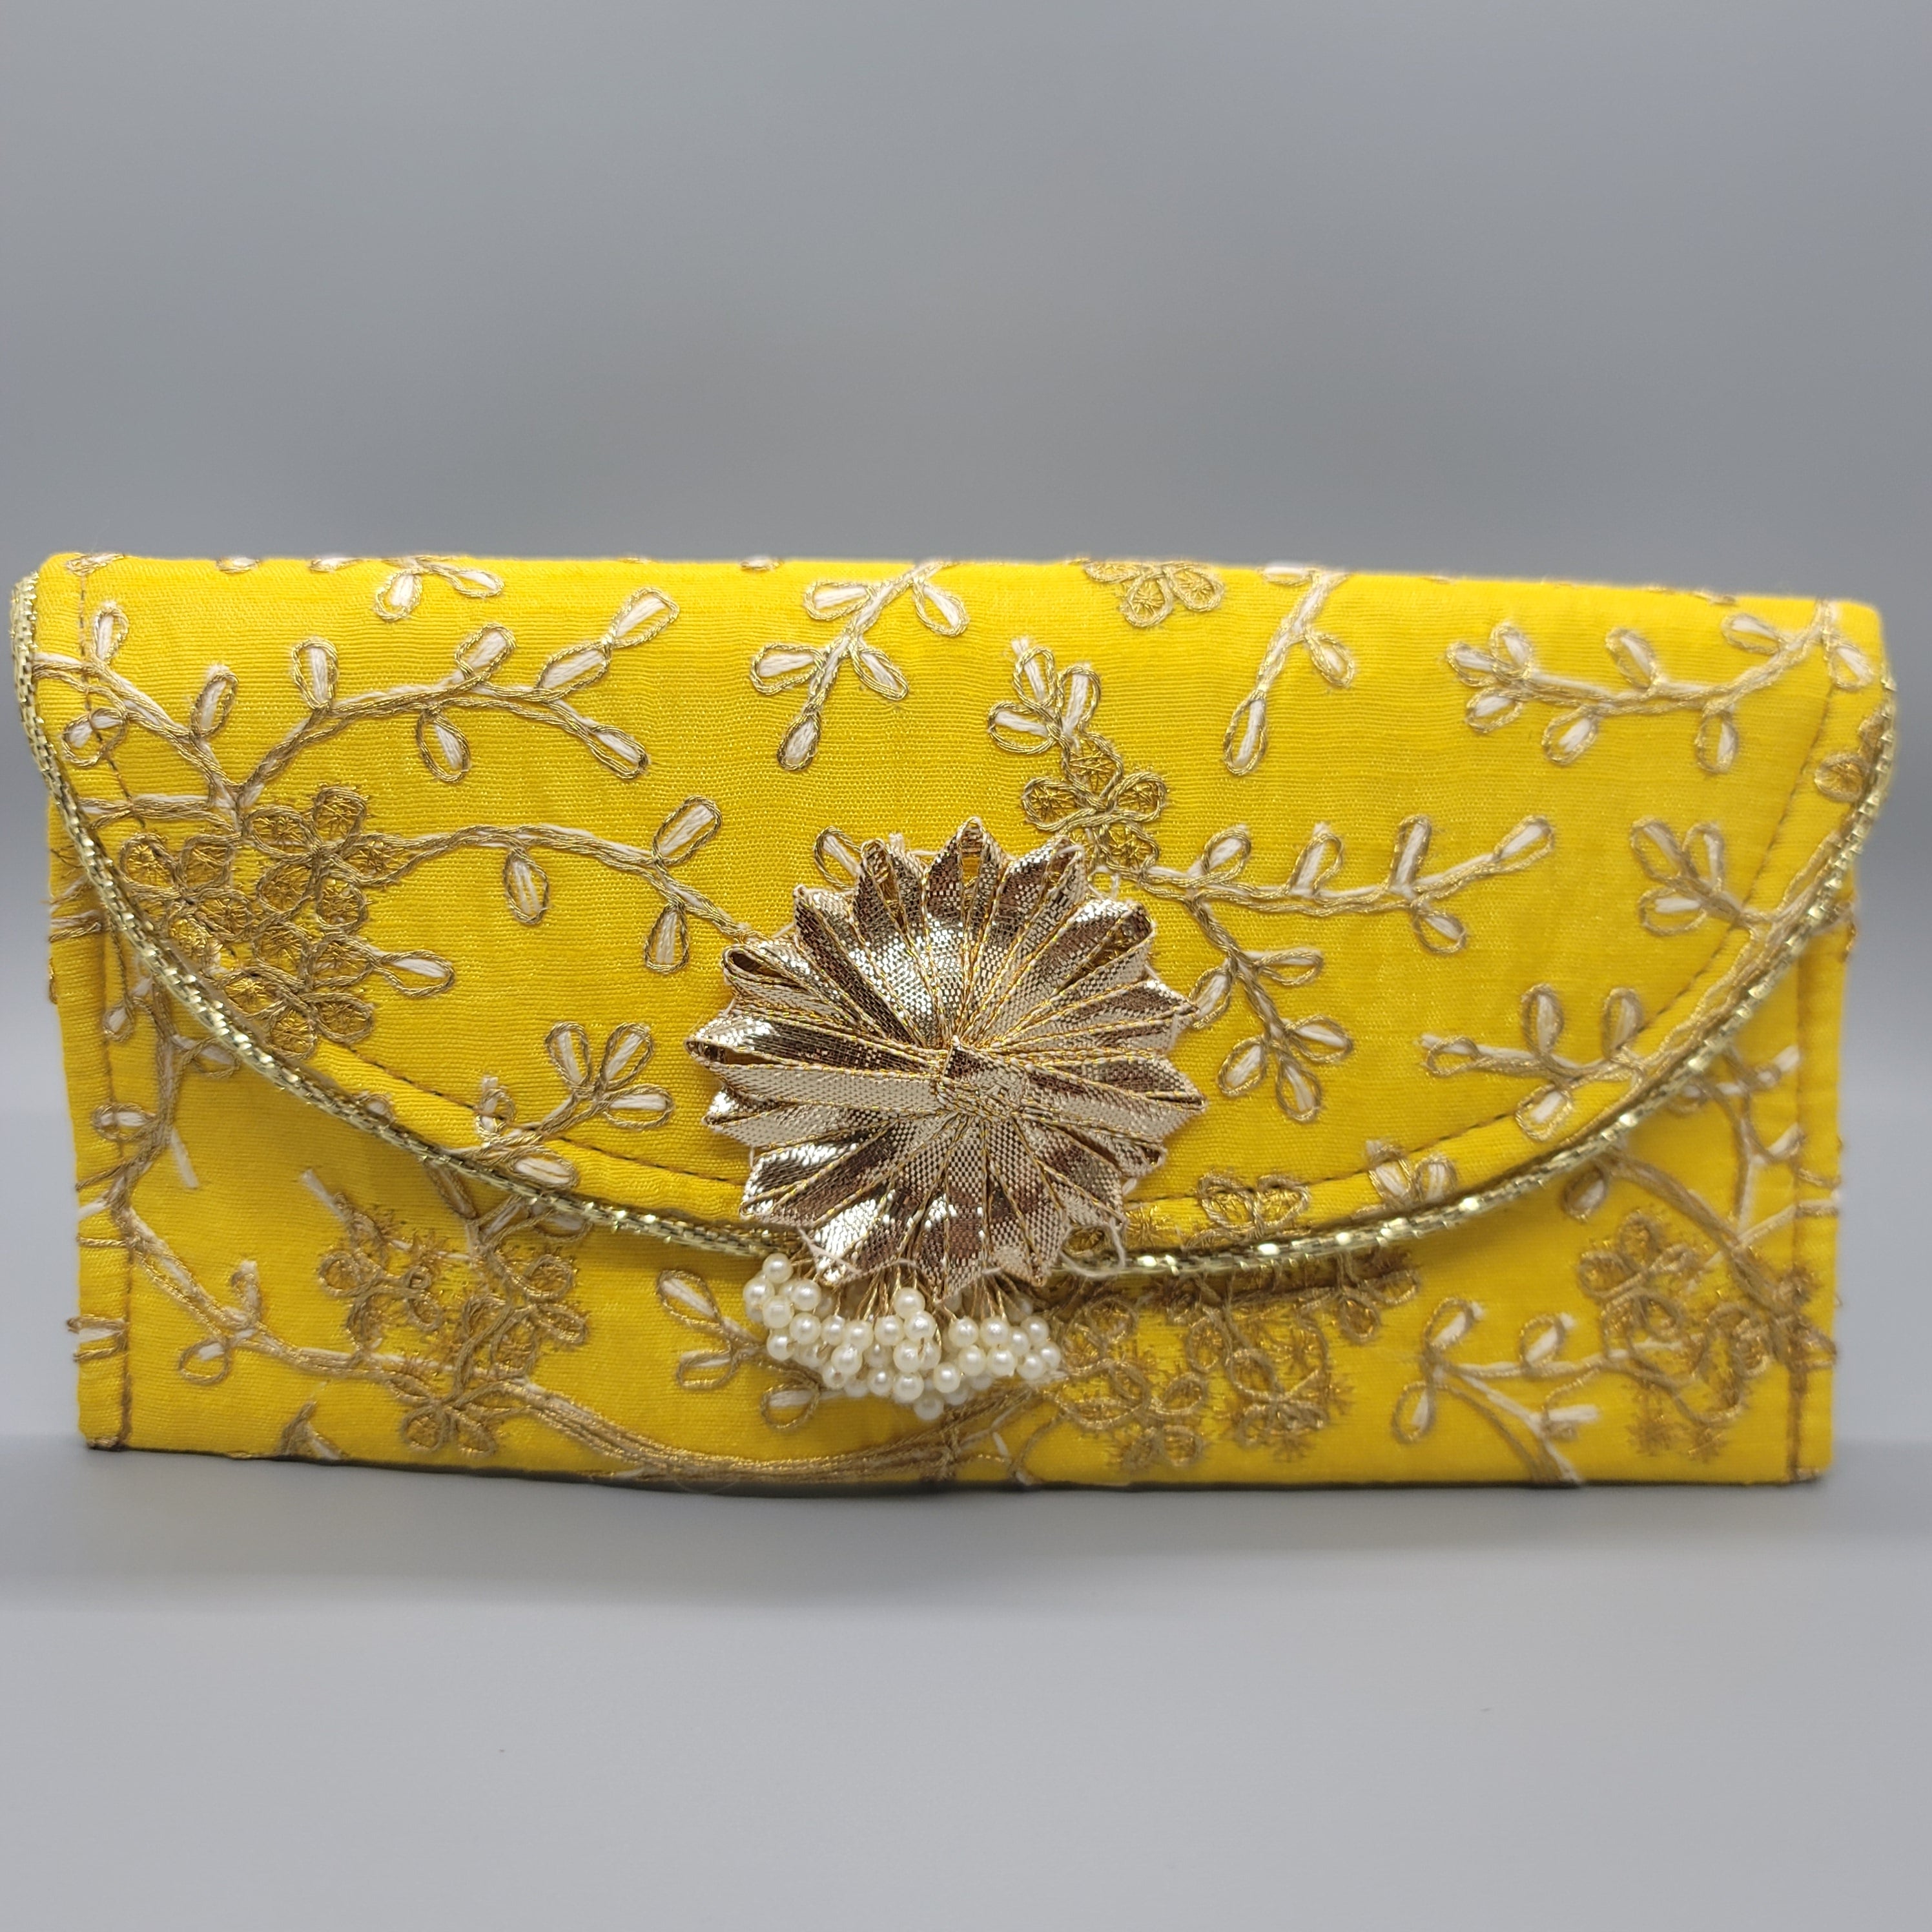 Hawk Embroider Designer Inspired Handbag for Woman Zardosi Sequin